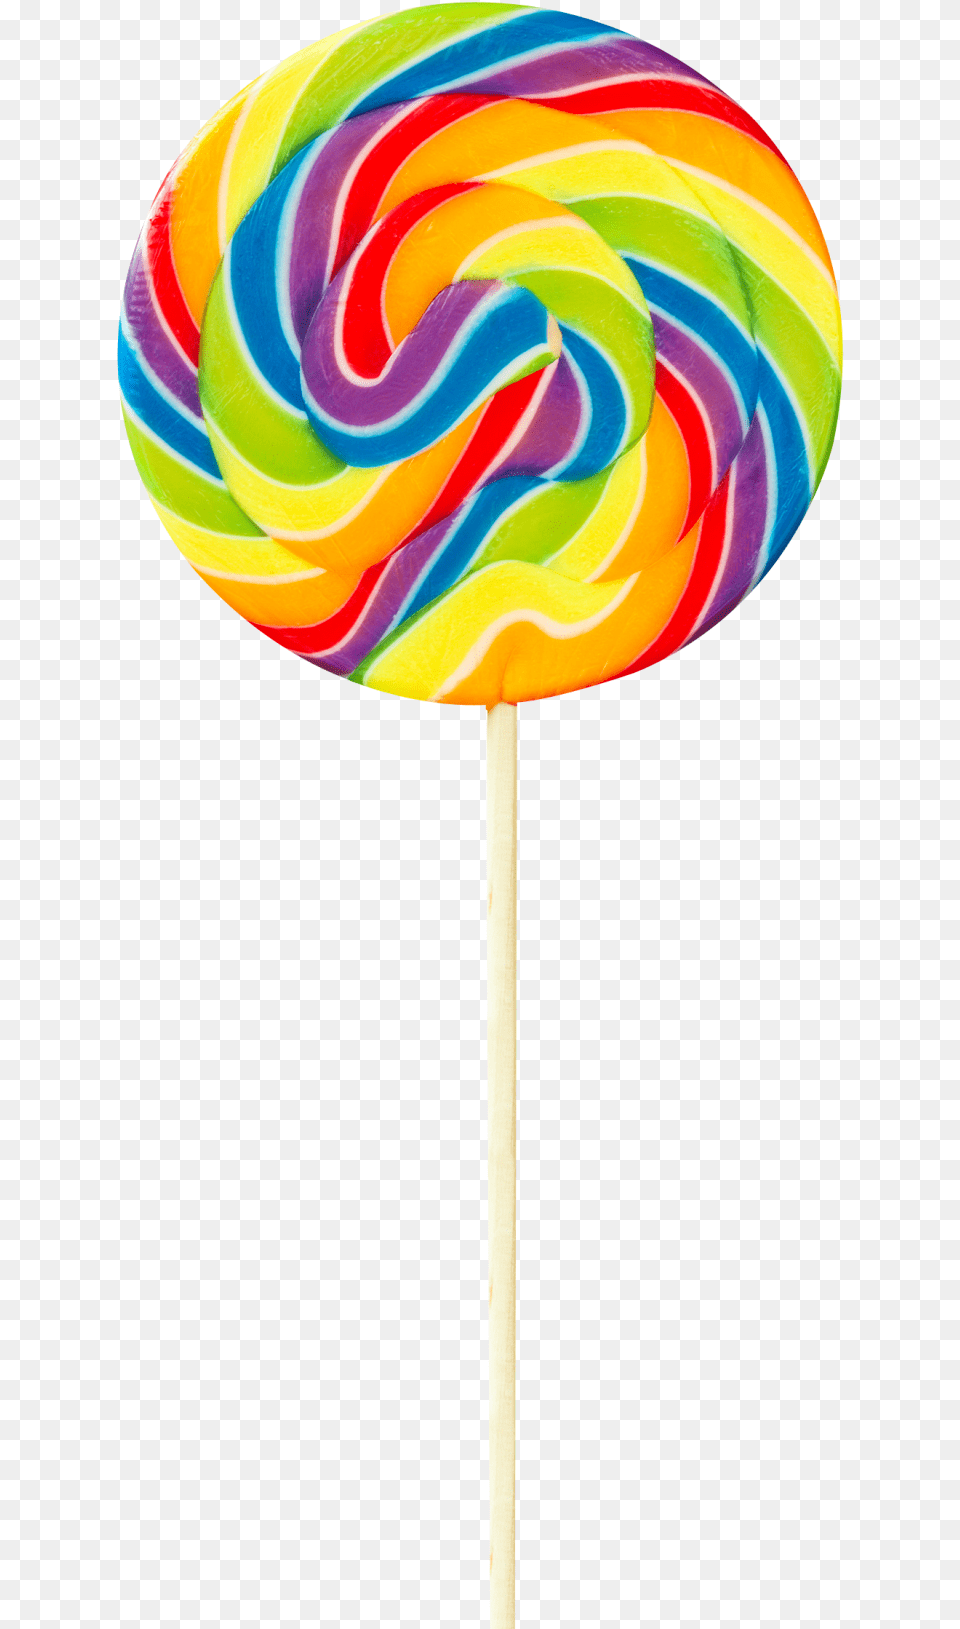 Swirl Lollipop Image Transparent Background Lollipop Transparent, Candy, Food, Sweets Free Png Download